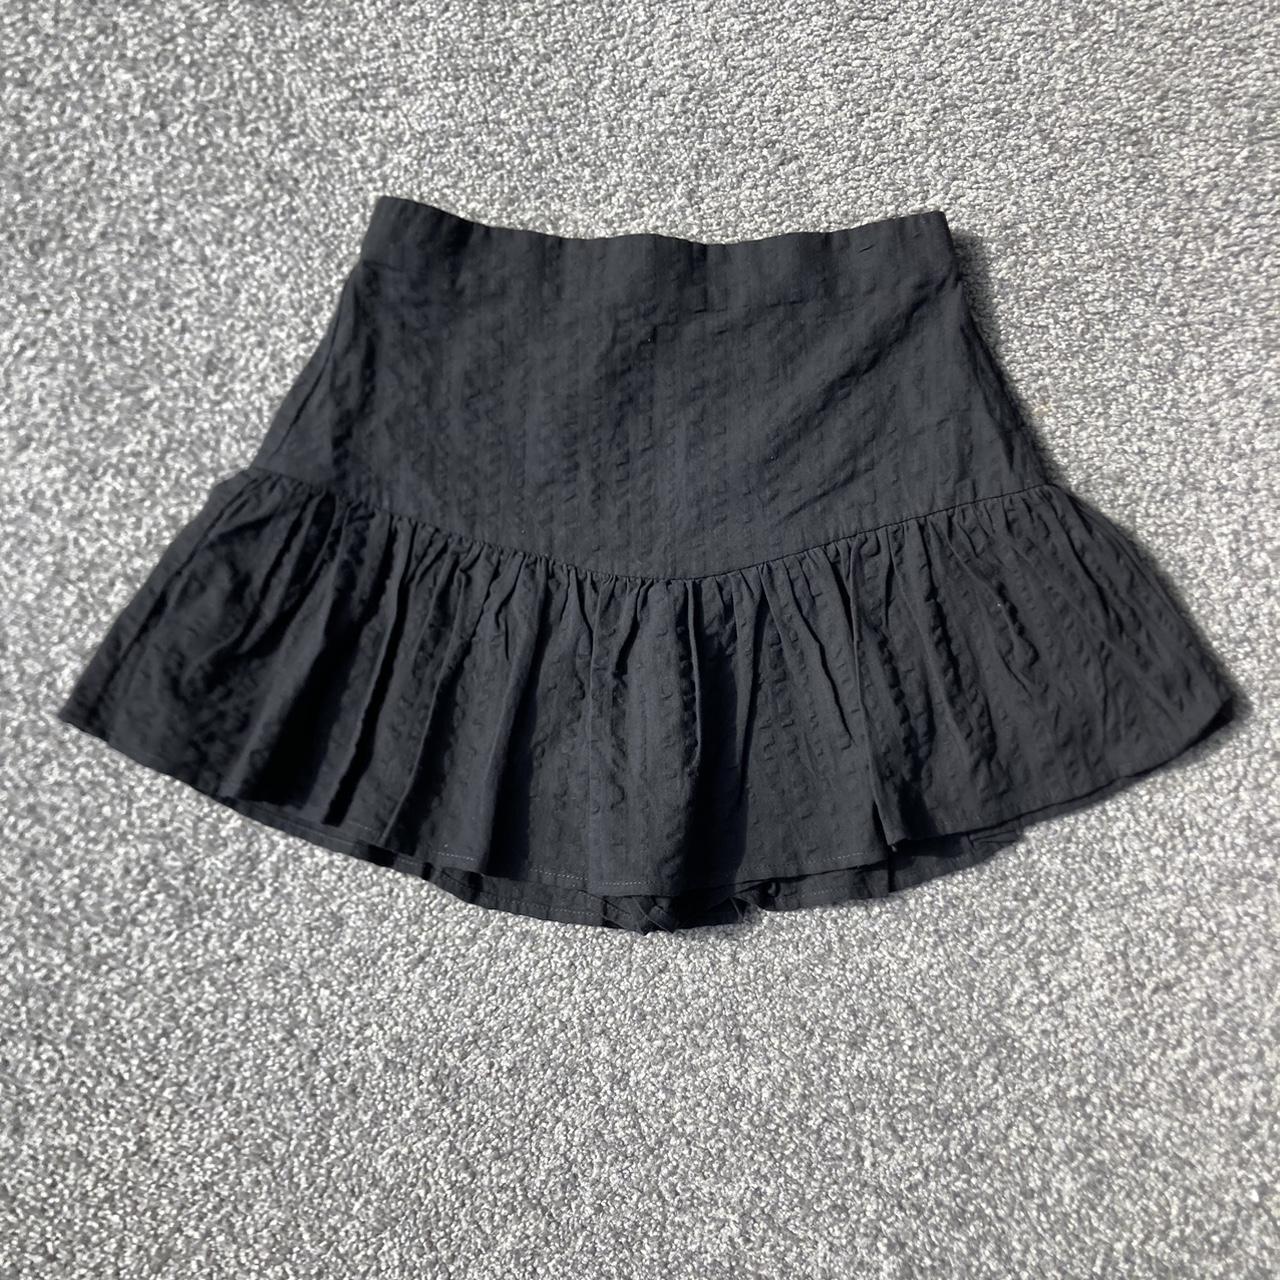 Black mini skirt with built in shorts... - Depop